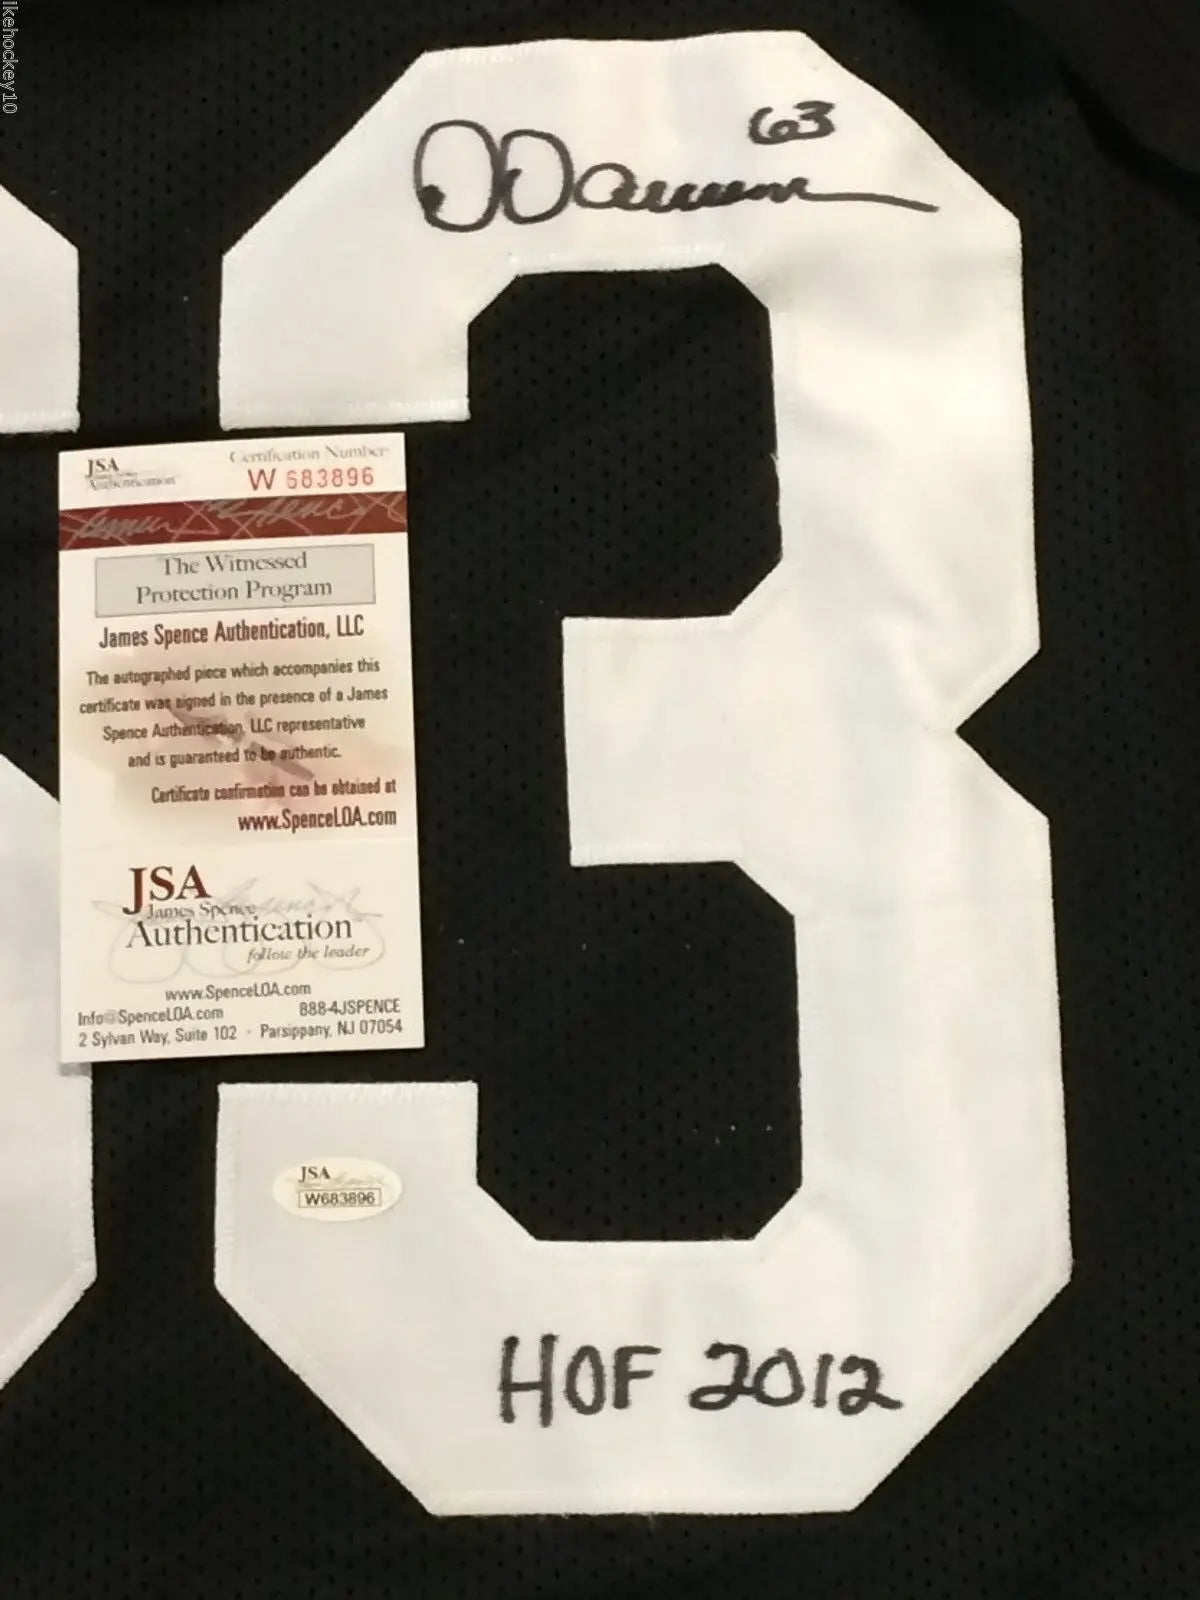 MVP Authentics Dermontti Dawson Autographed Signed Insc Pittsburgh Steelers Jersey Jsa  Coa 117 sports jersey framing , jersey framing